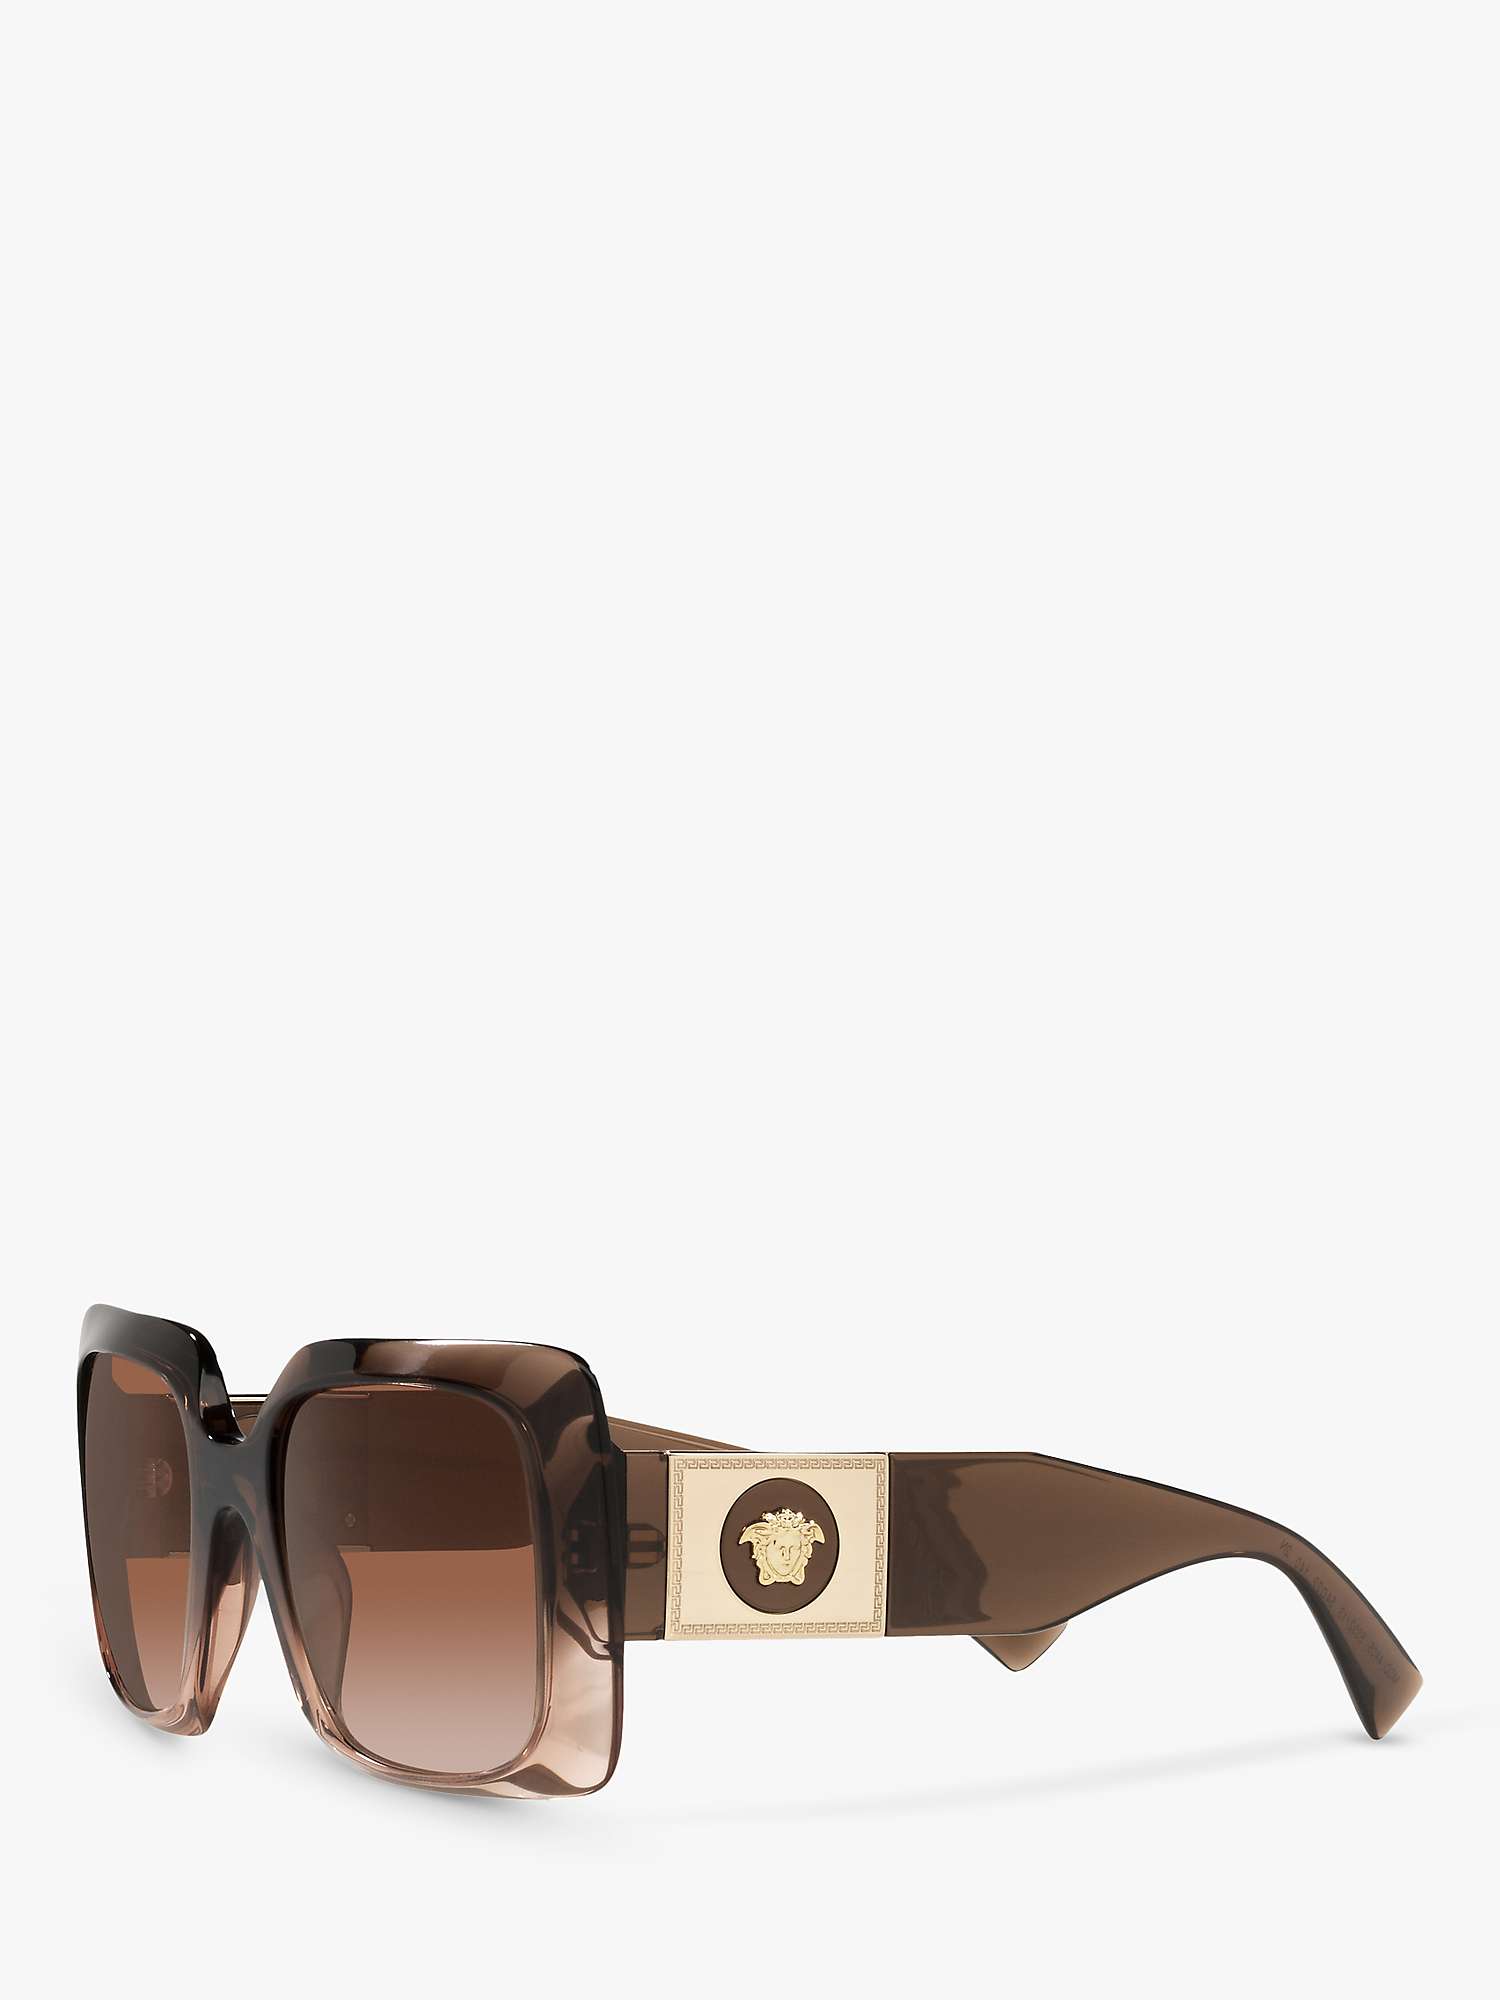 Buy Versace VE4405 Women's Chunky Rectangular Sunglasses, Transparenet Brown/Brown Gradient Online at johnlewis.com